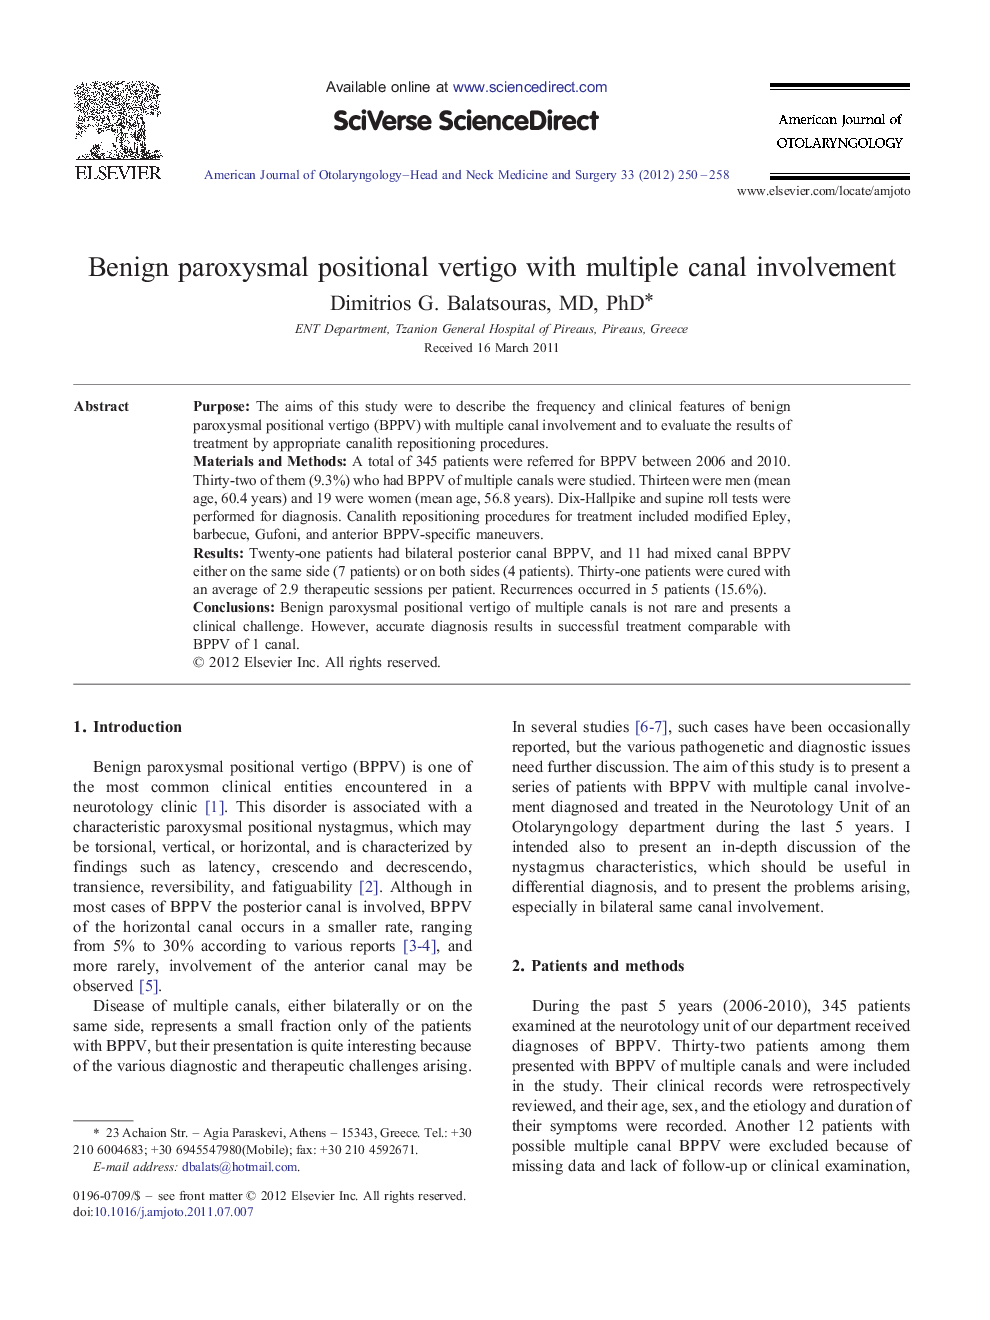 Benign paroxysmal positional vertigo with multiple canal involvement